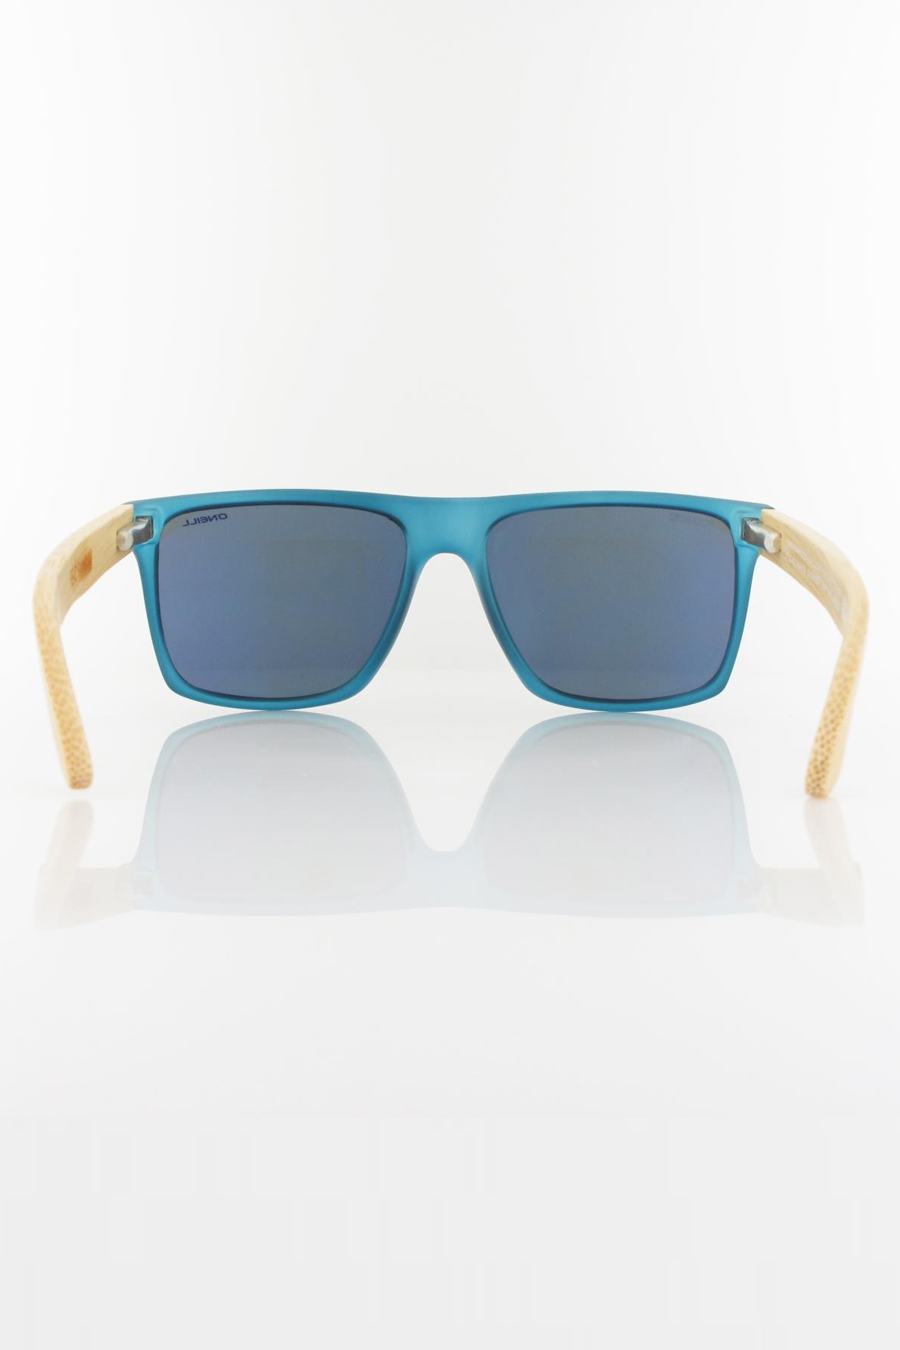 Sunglasses ONEILL ONS-HARWOOD20-105P